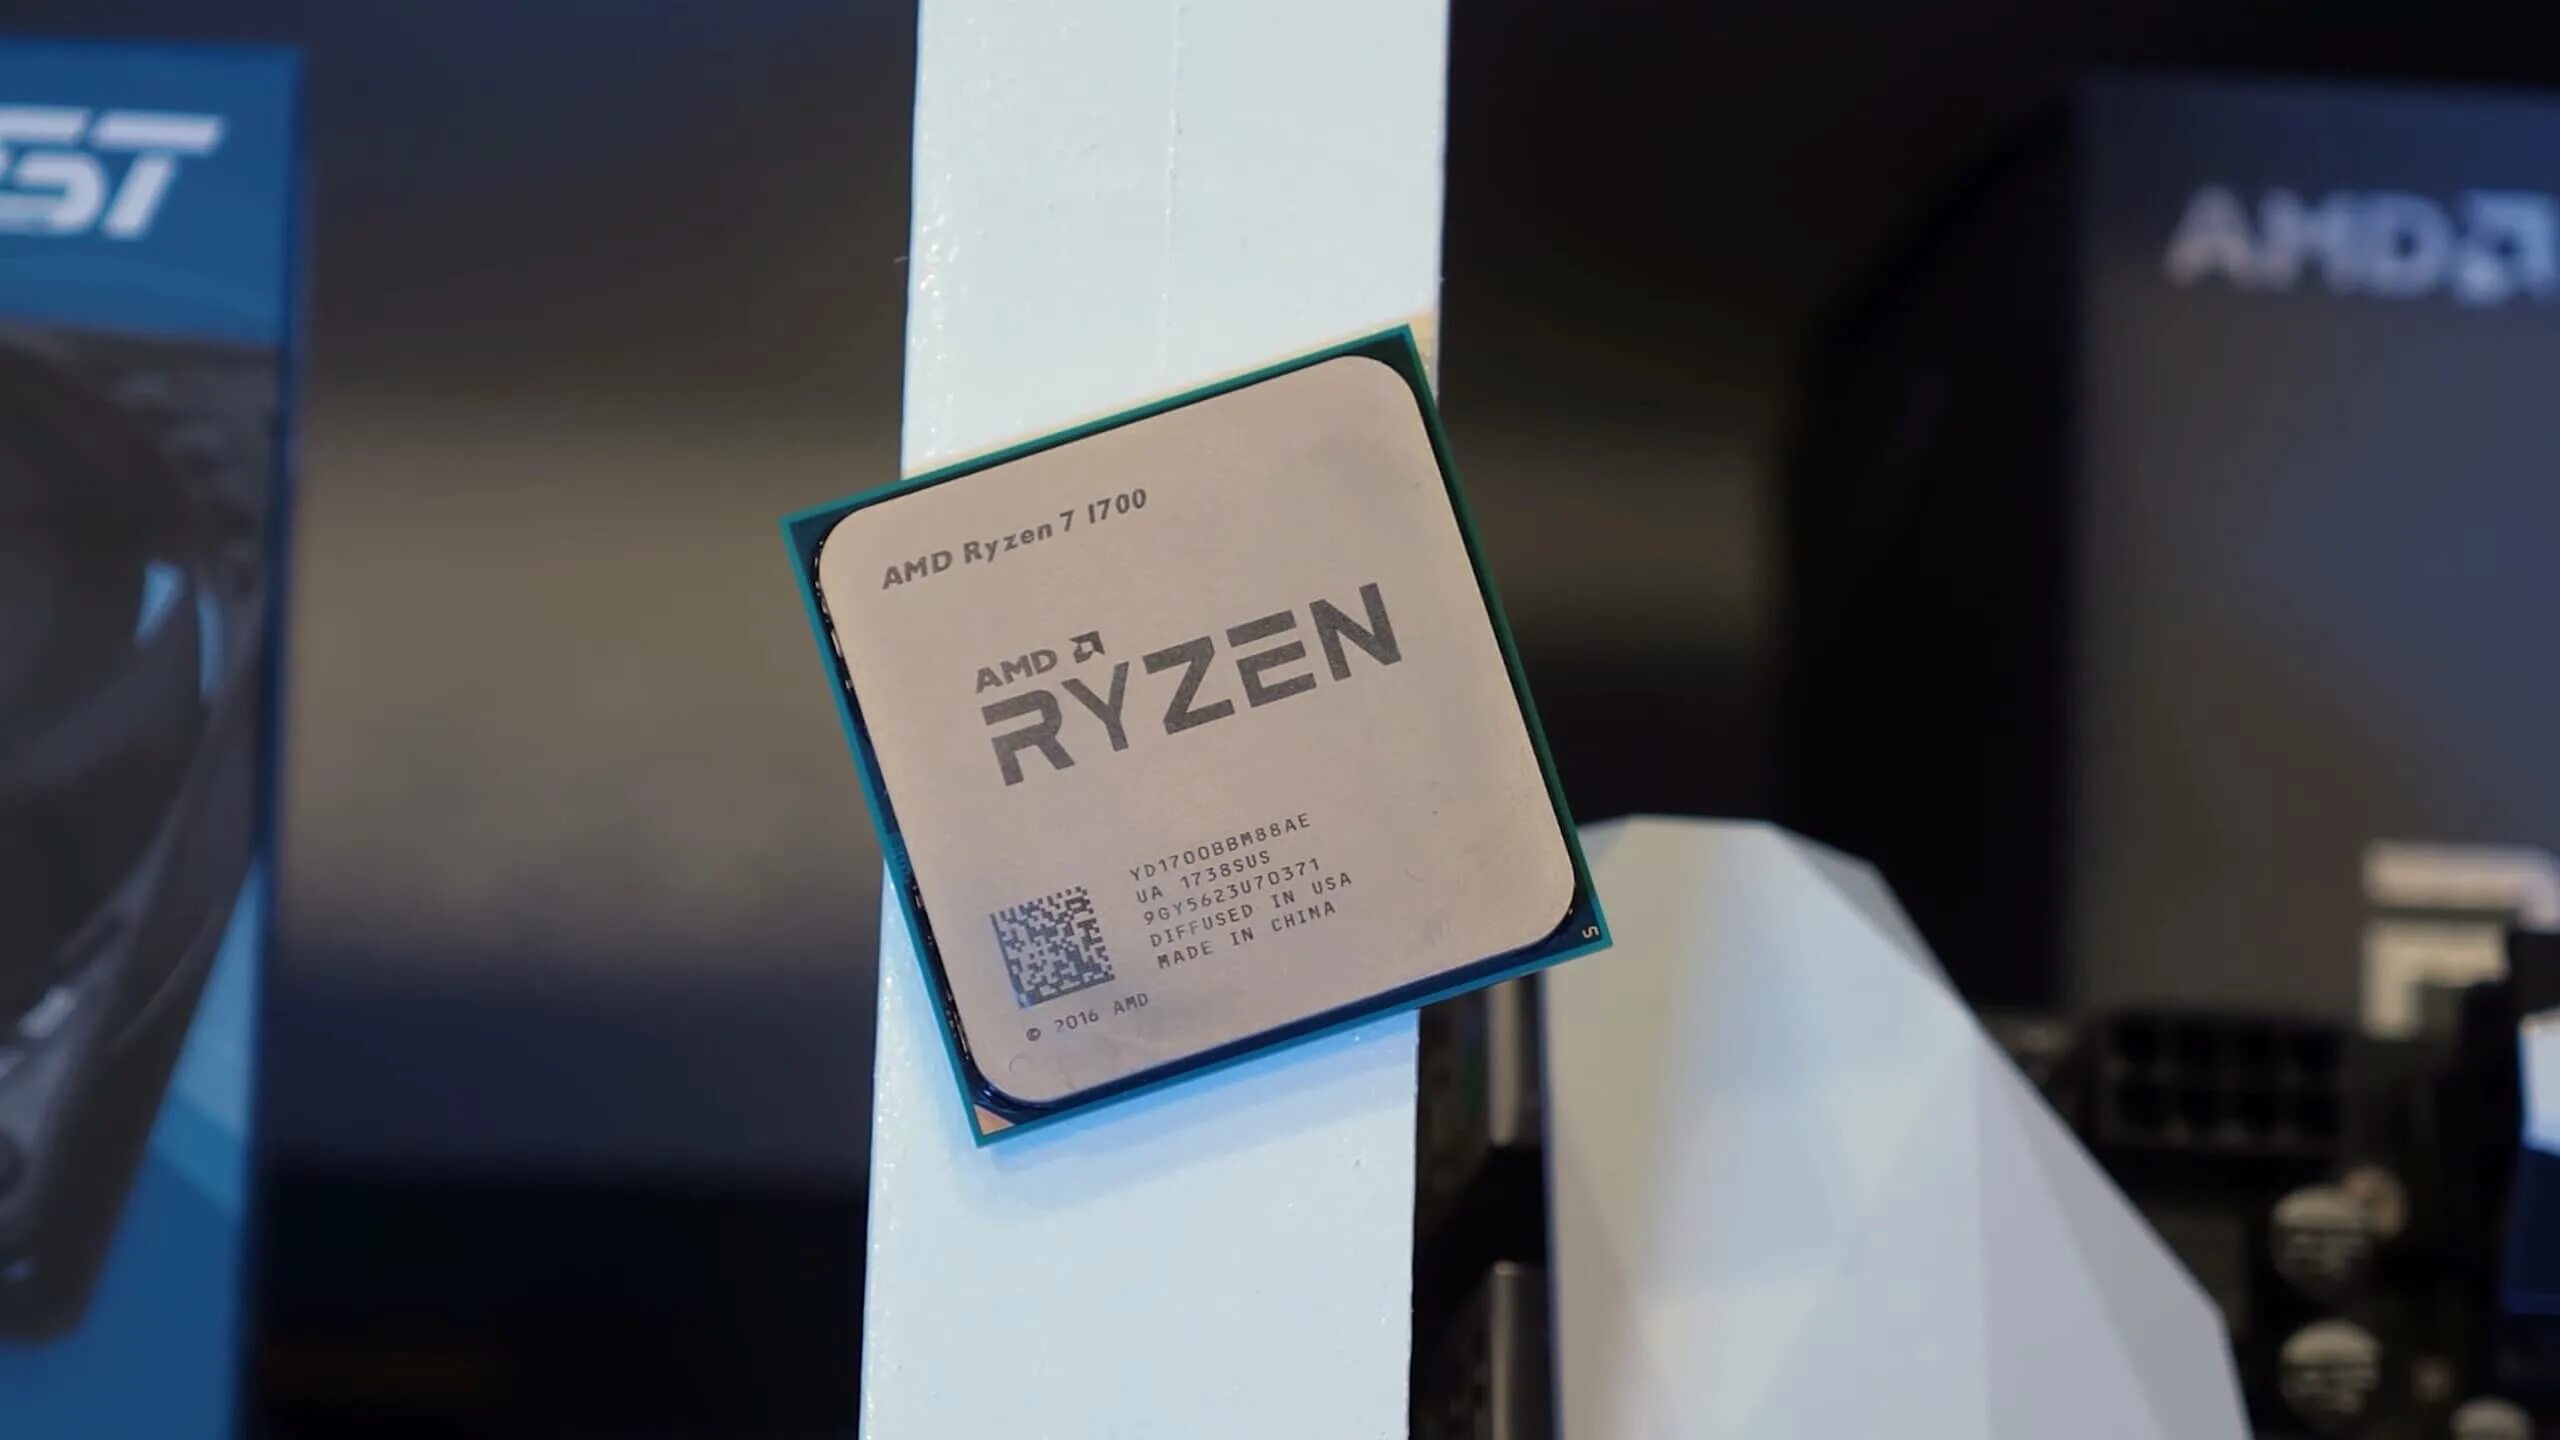 Ryzen 7 1700. Ryzen pro7 х1700. Ryzen 7 1700x. AMD Ryzen 7 Pro 1700x eight-Core Processor.